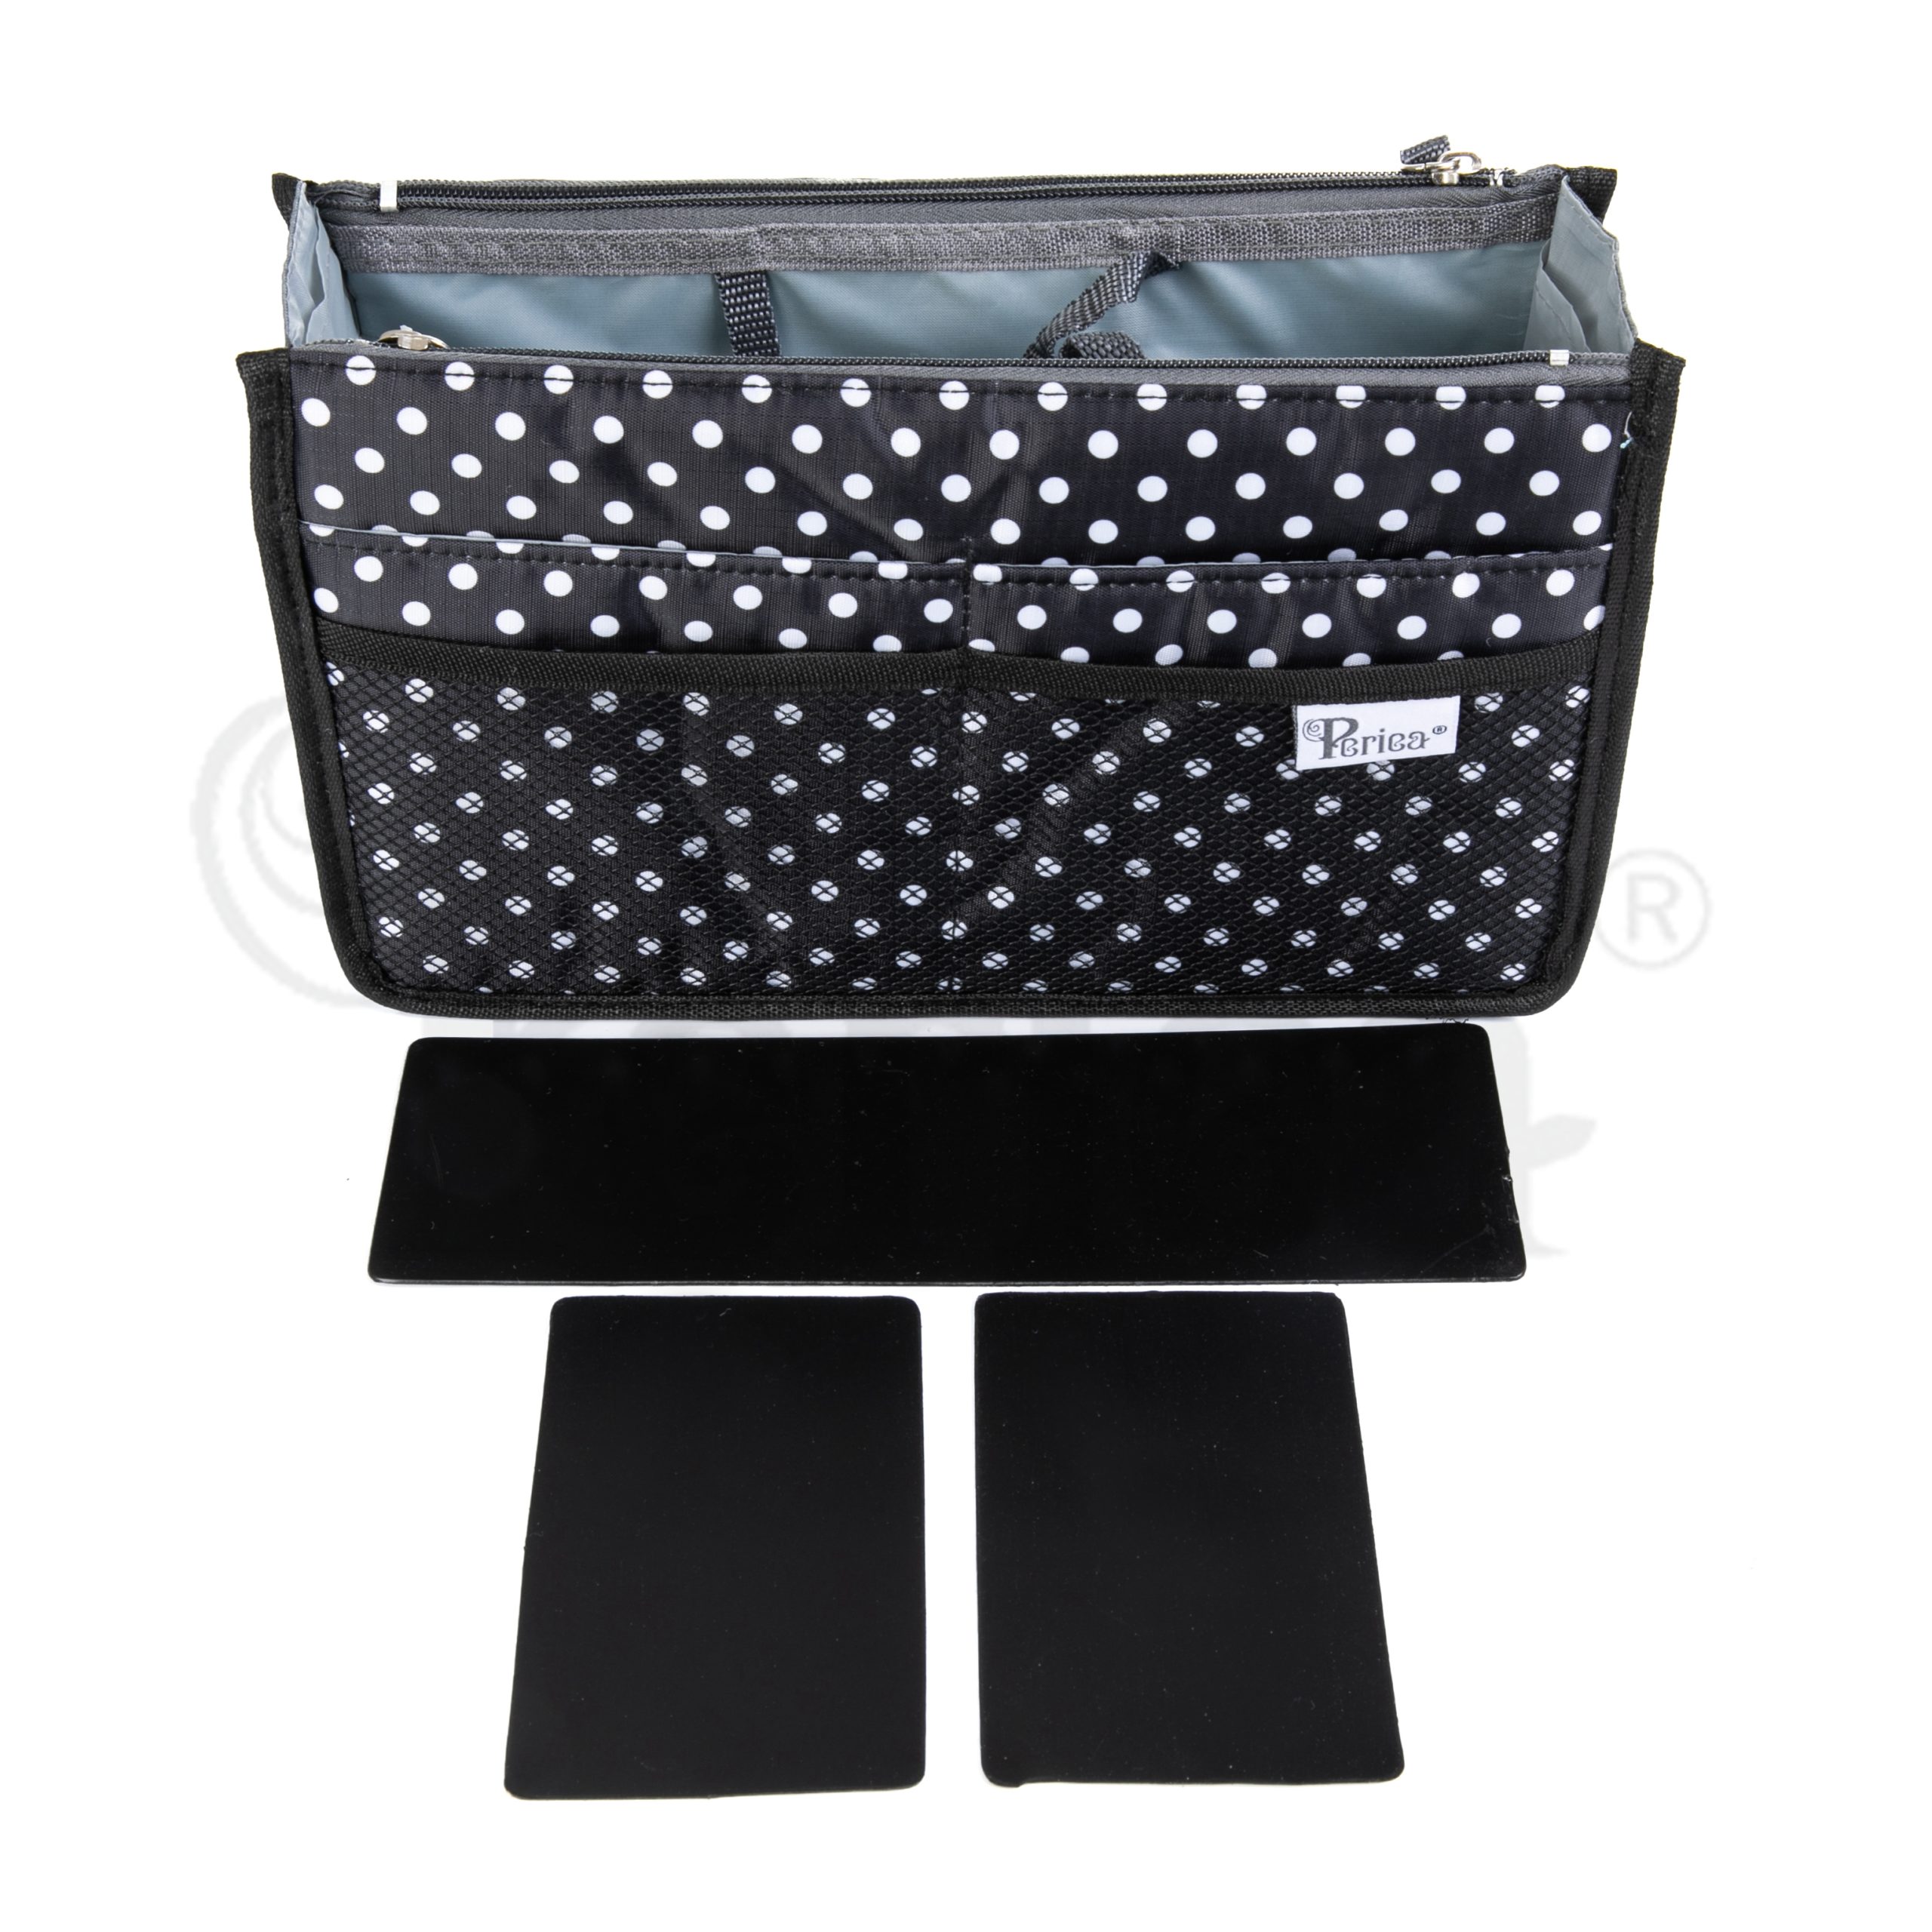 Periea Handbag Organizer 14 Color & Pattern Options Medium Size